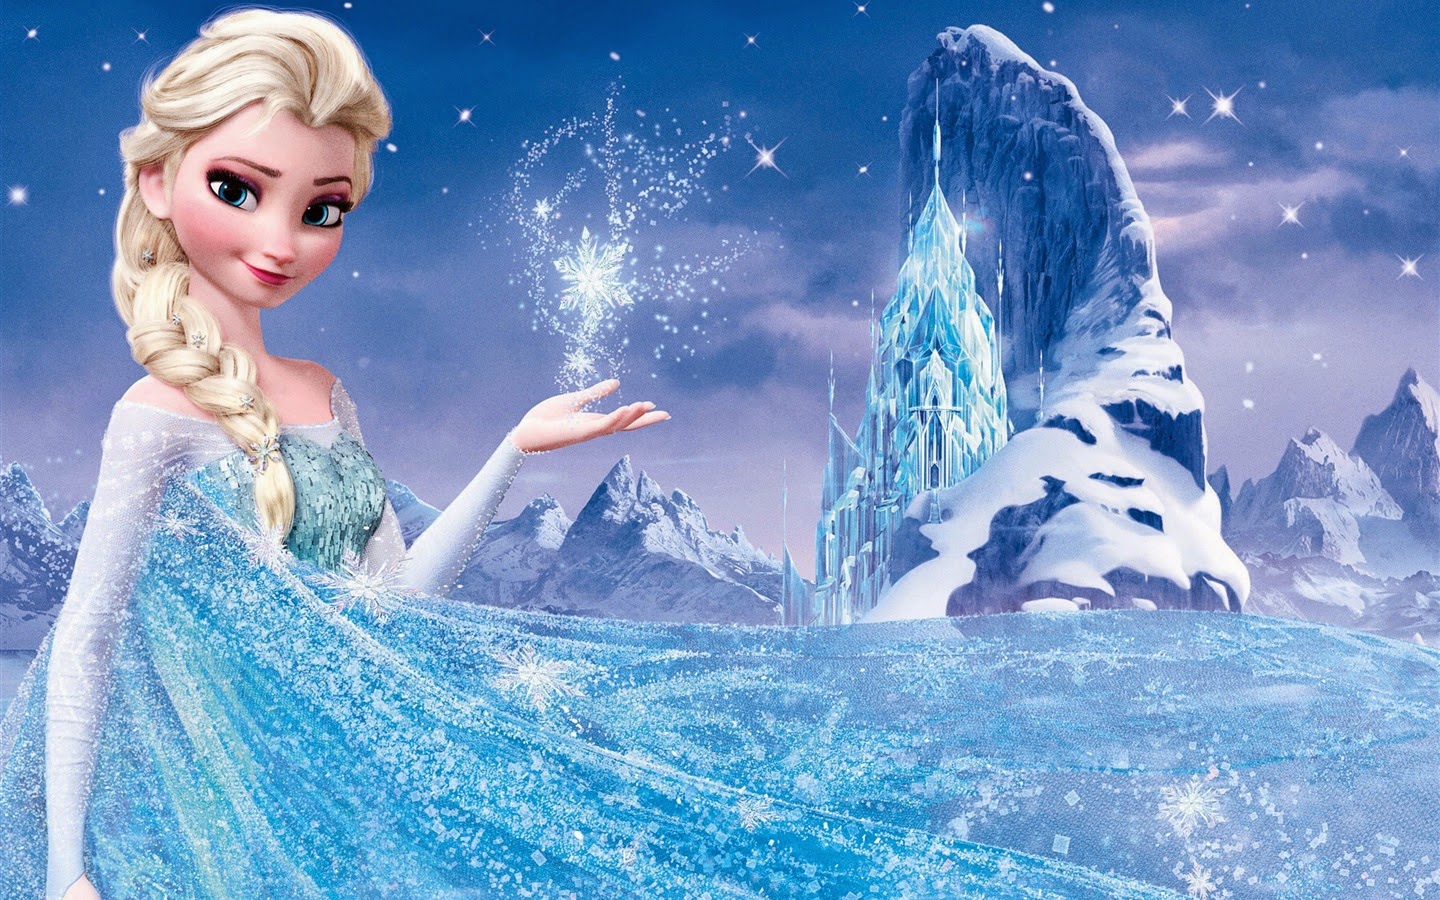 Kumpulan Foto Gambar Princess Disney Princess elsa 'Frozen' | Gambar Foto Terbaru